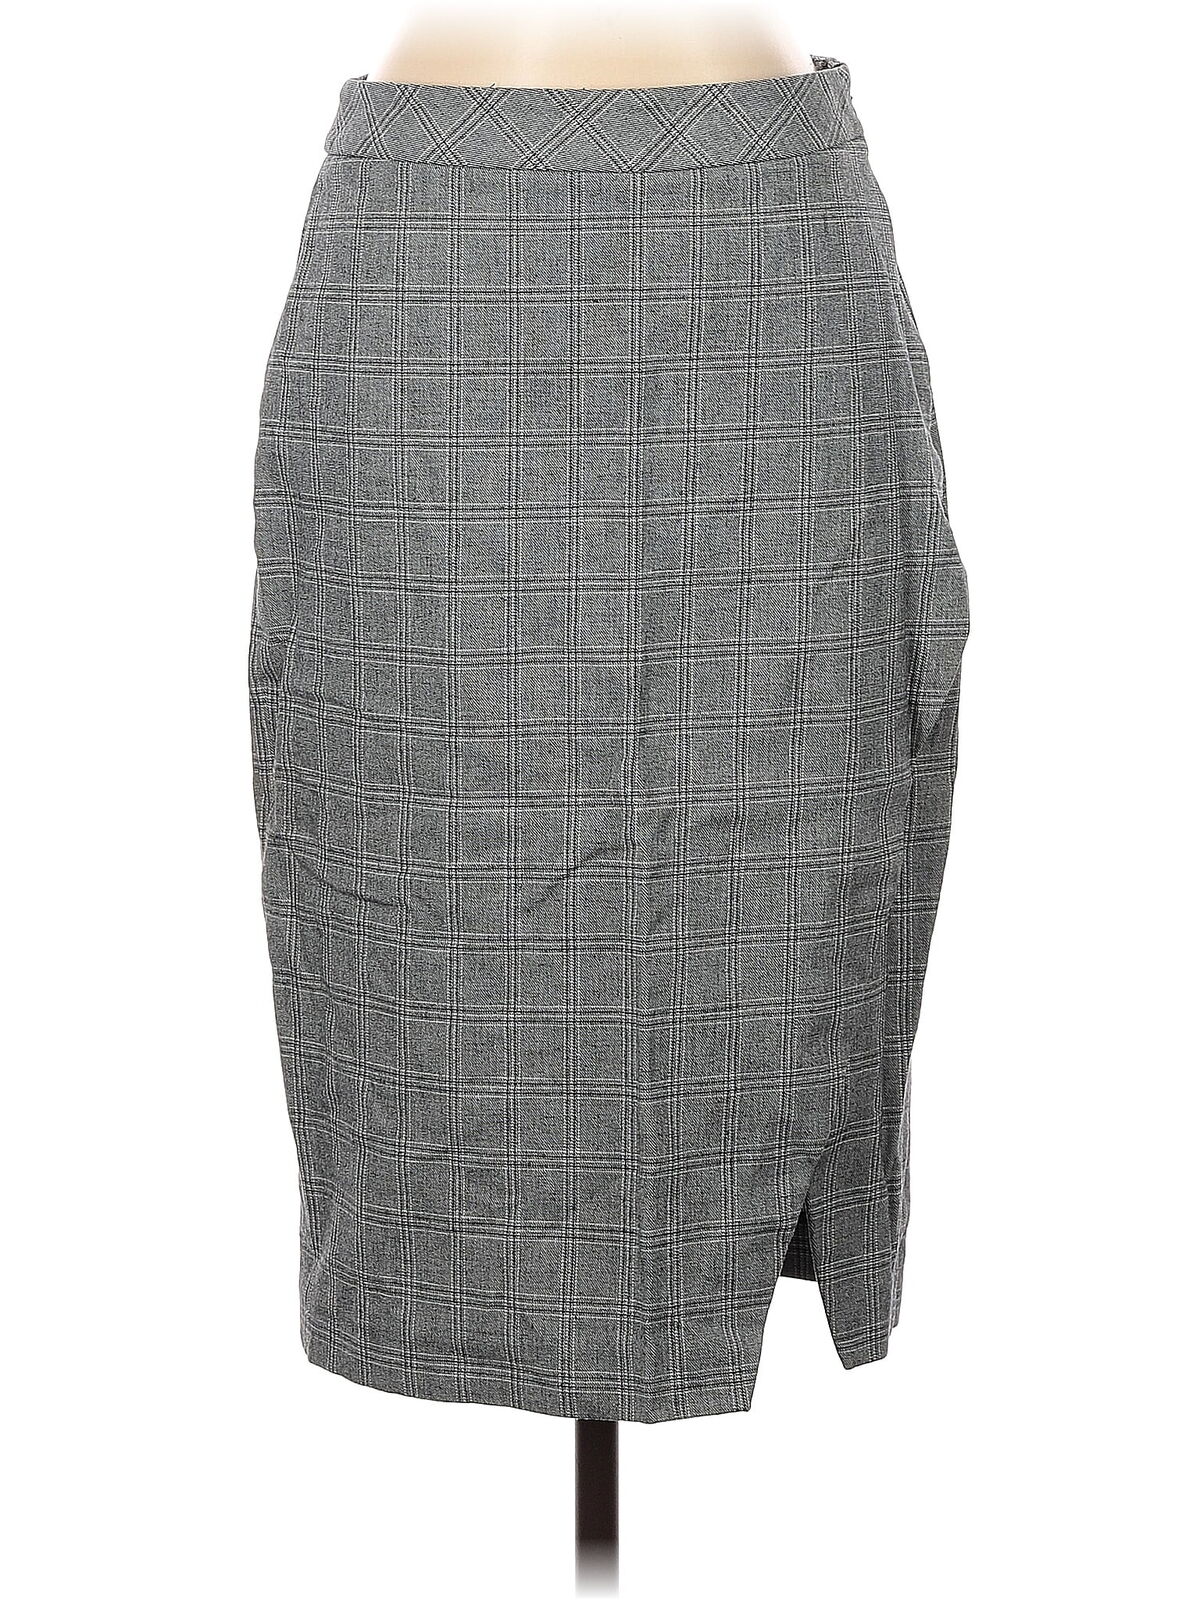 Banana Republic Women Gray Casual Skirt 2 - image 1